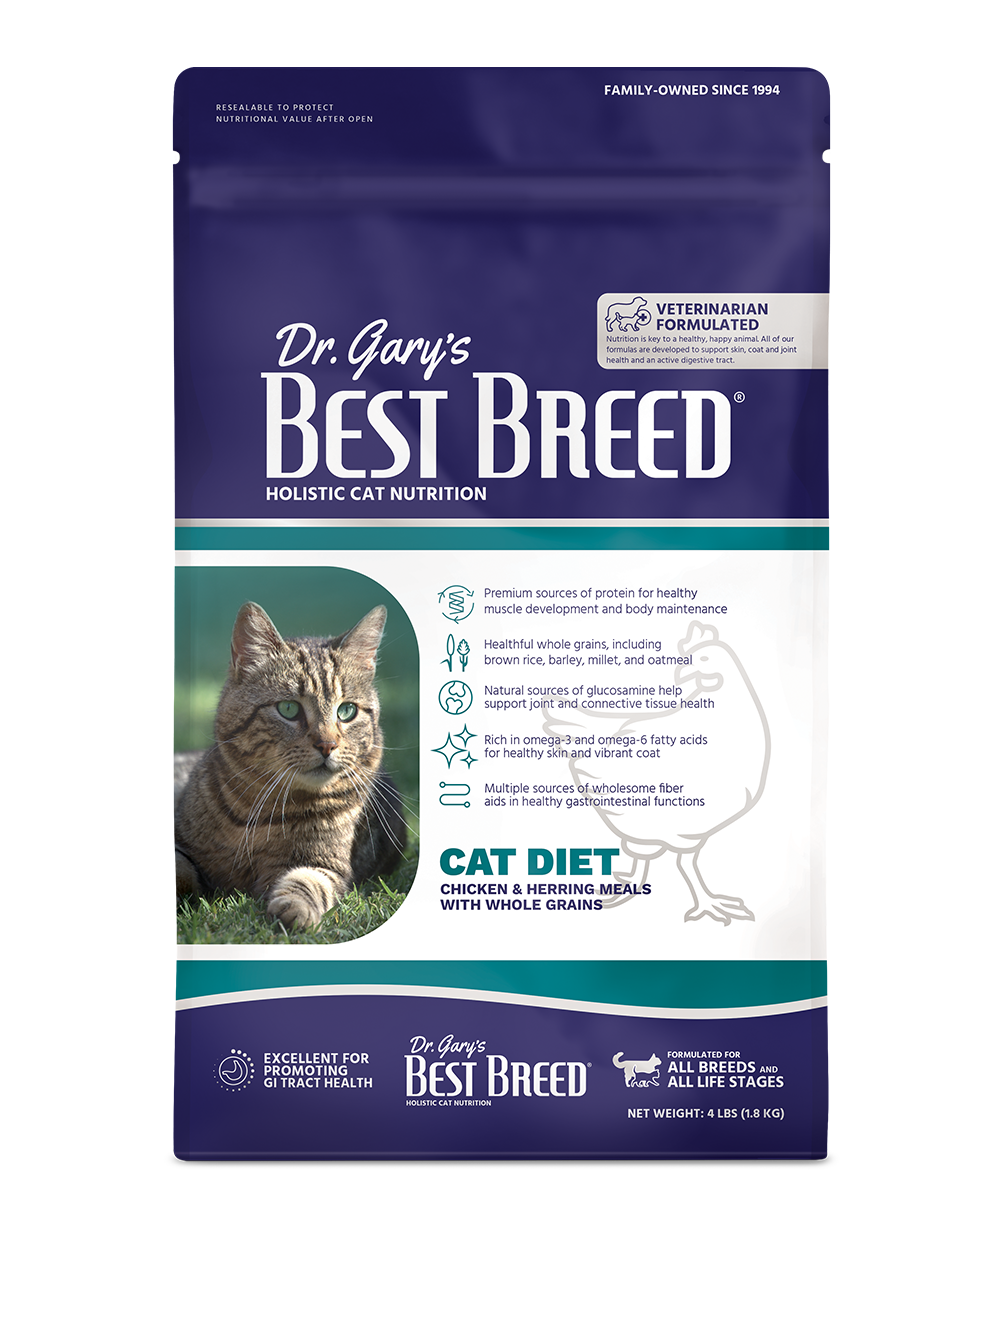 Best Breed Cat Diet - Best Breed